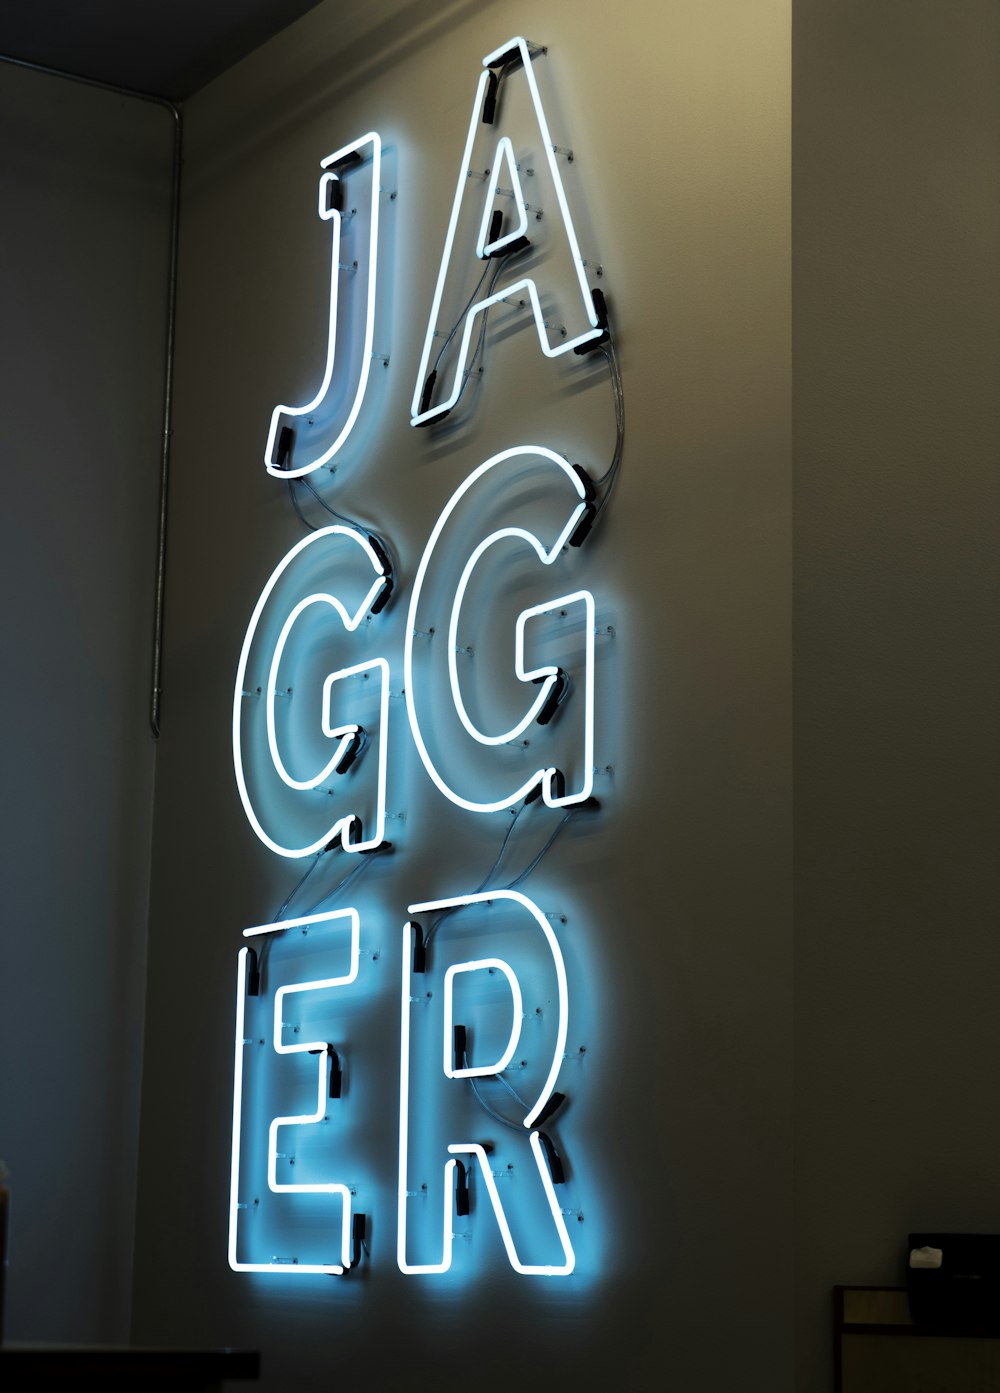 Jagger neon light signage